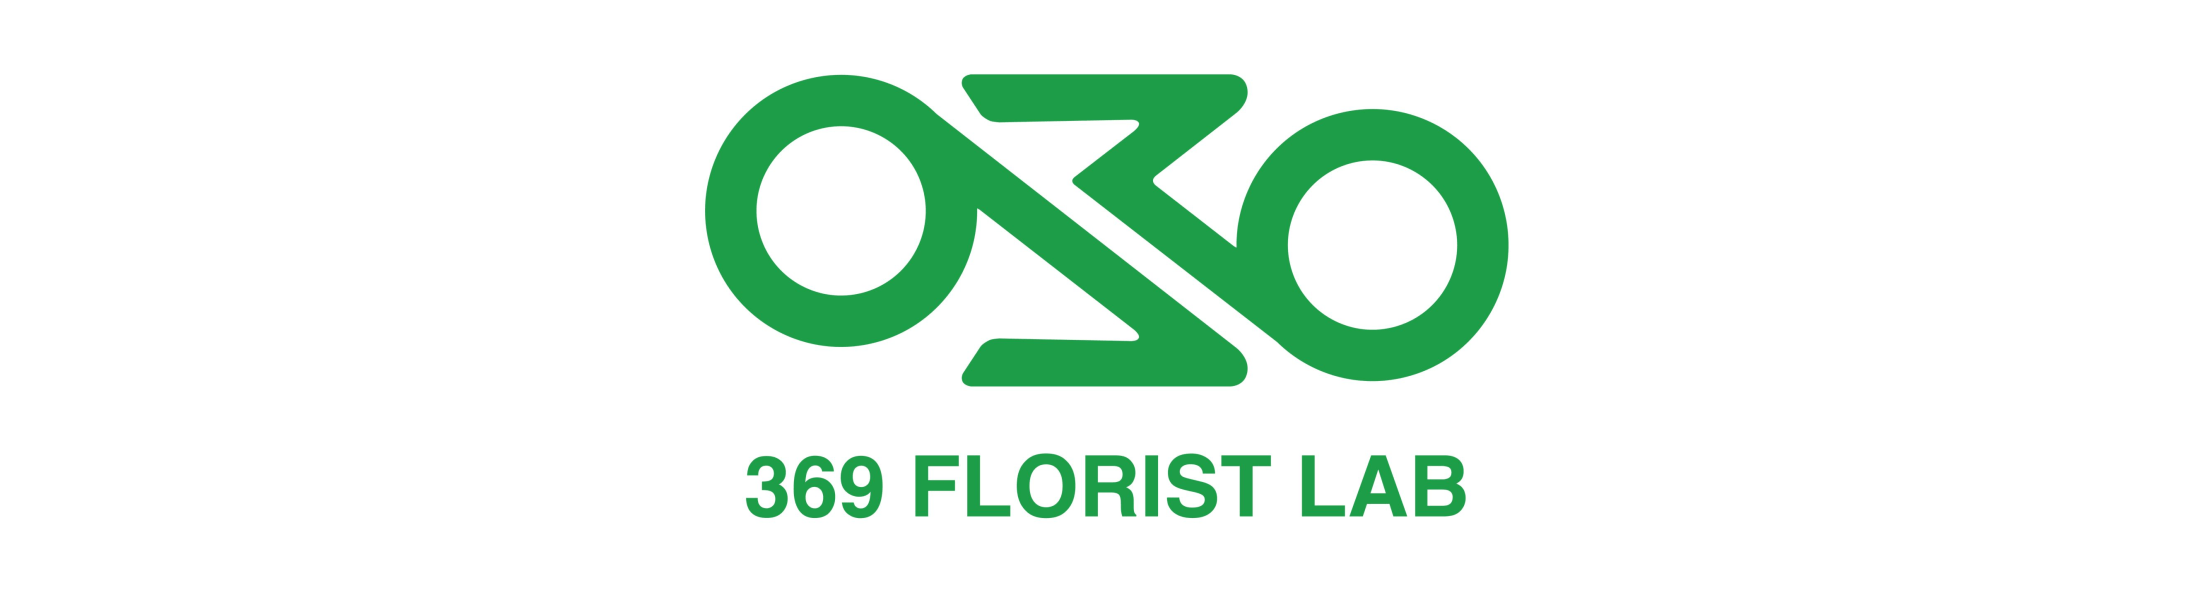 369 Florist Lab